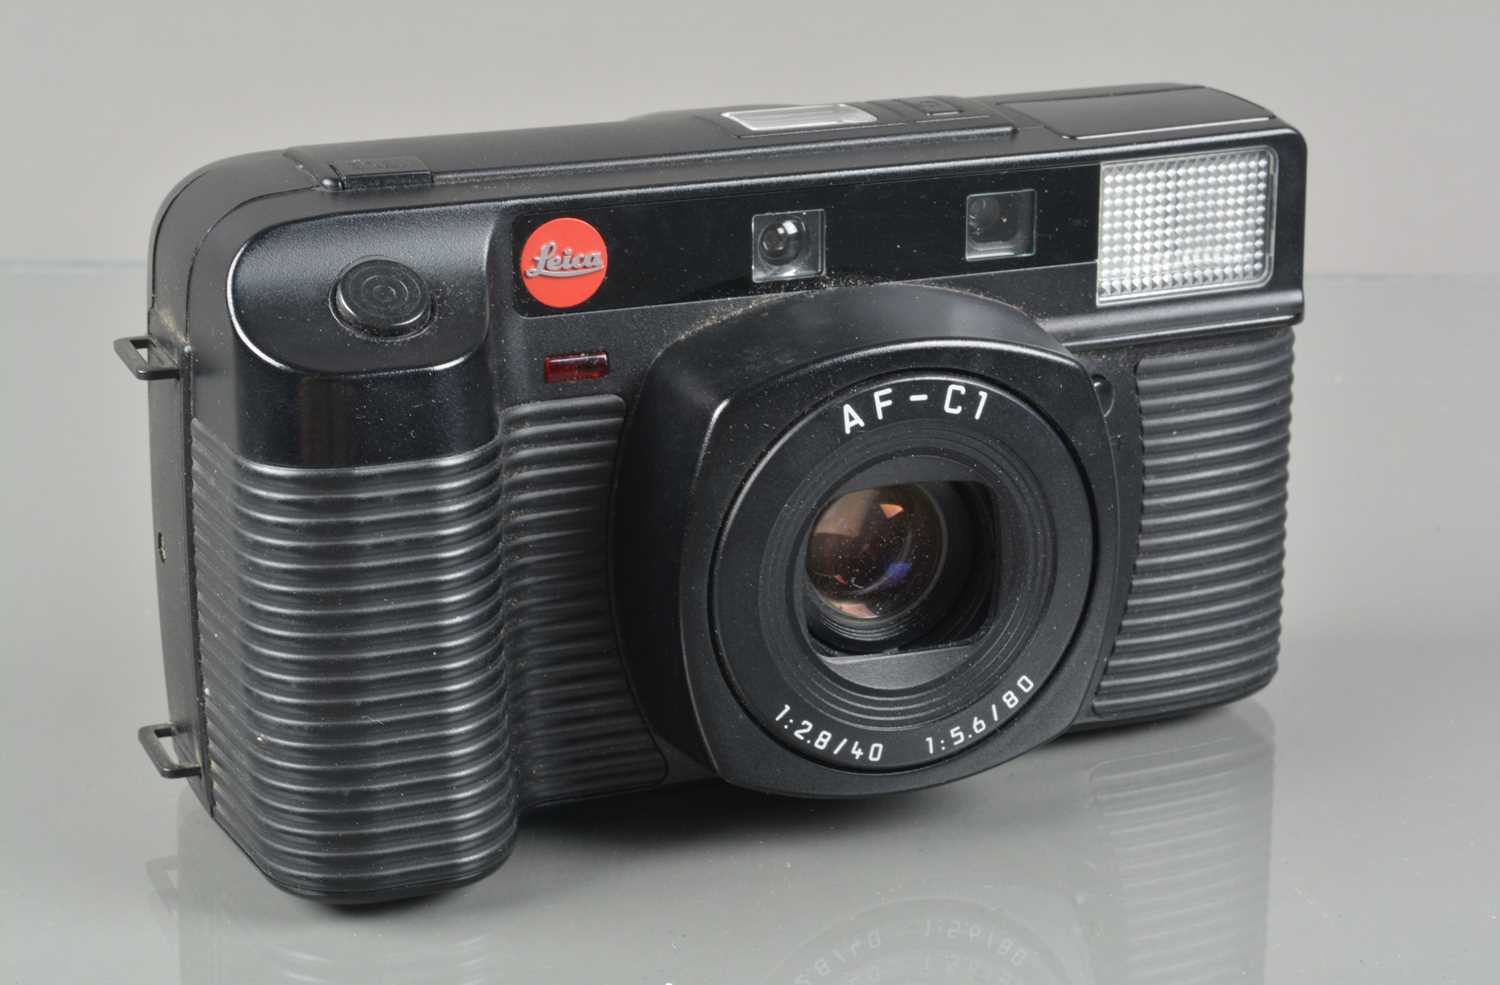 Lot 18 - A Leica AF-C1 Compact Camera